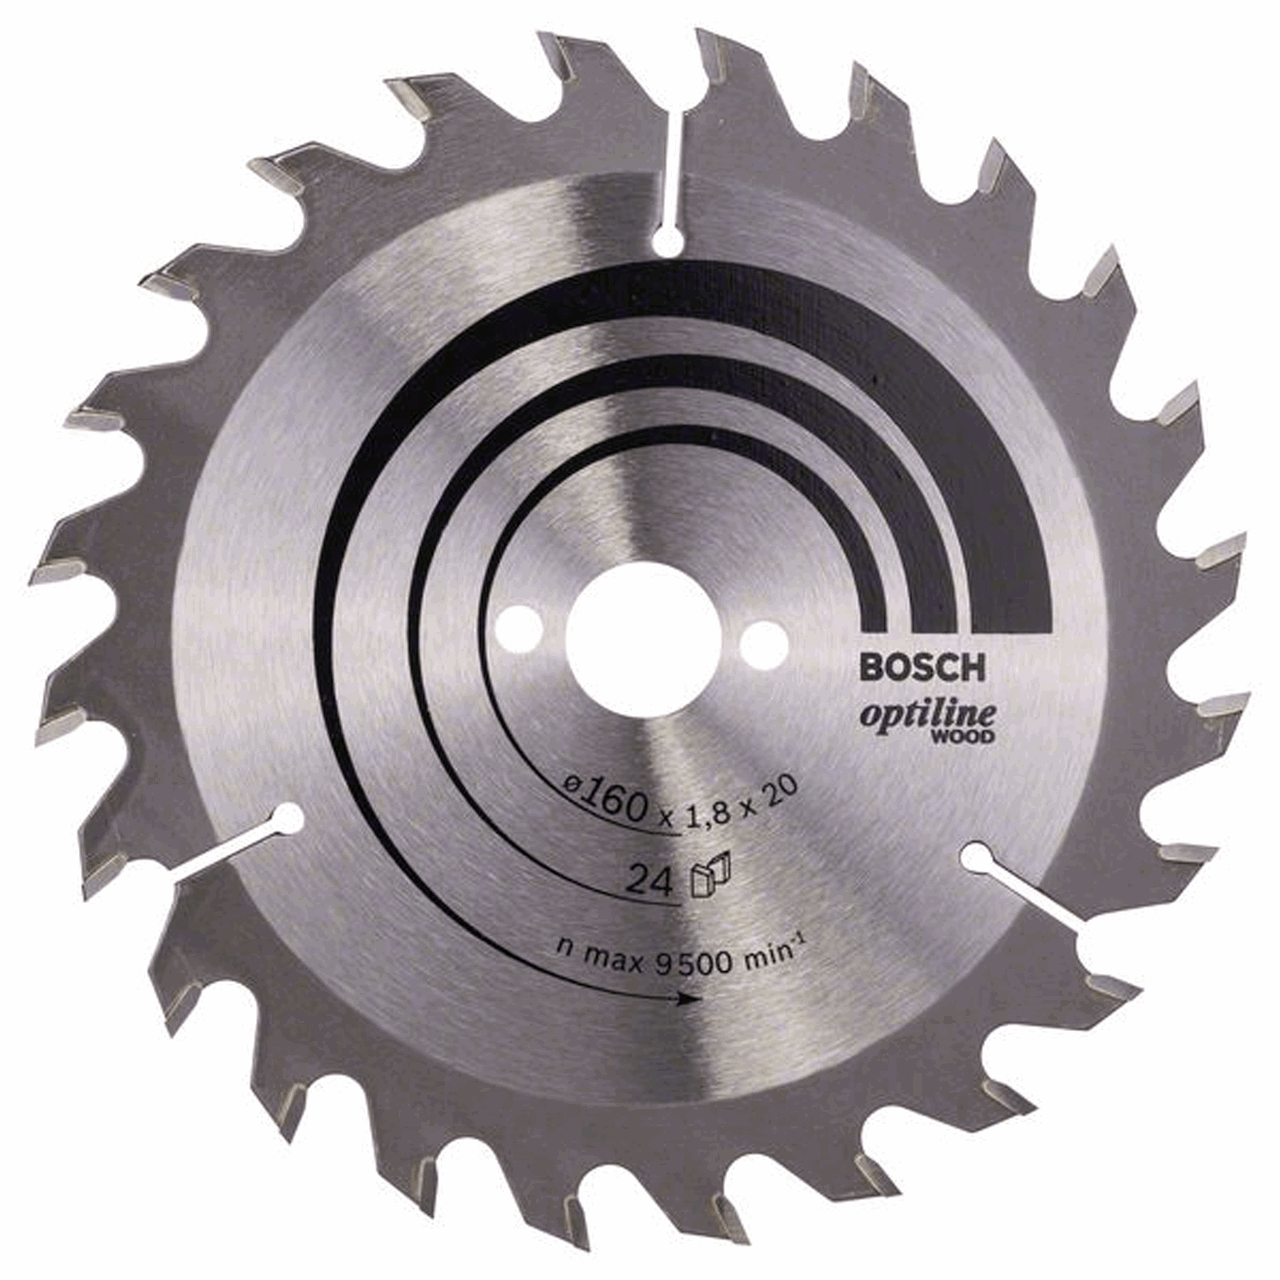 Bosch Circular Saw Blade Optiline Wood 160 x 20/16 x 1,8 mm, 24 2608641171 Power Tool Services